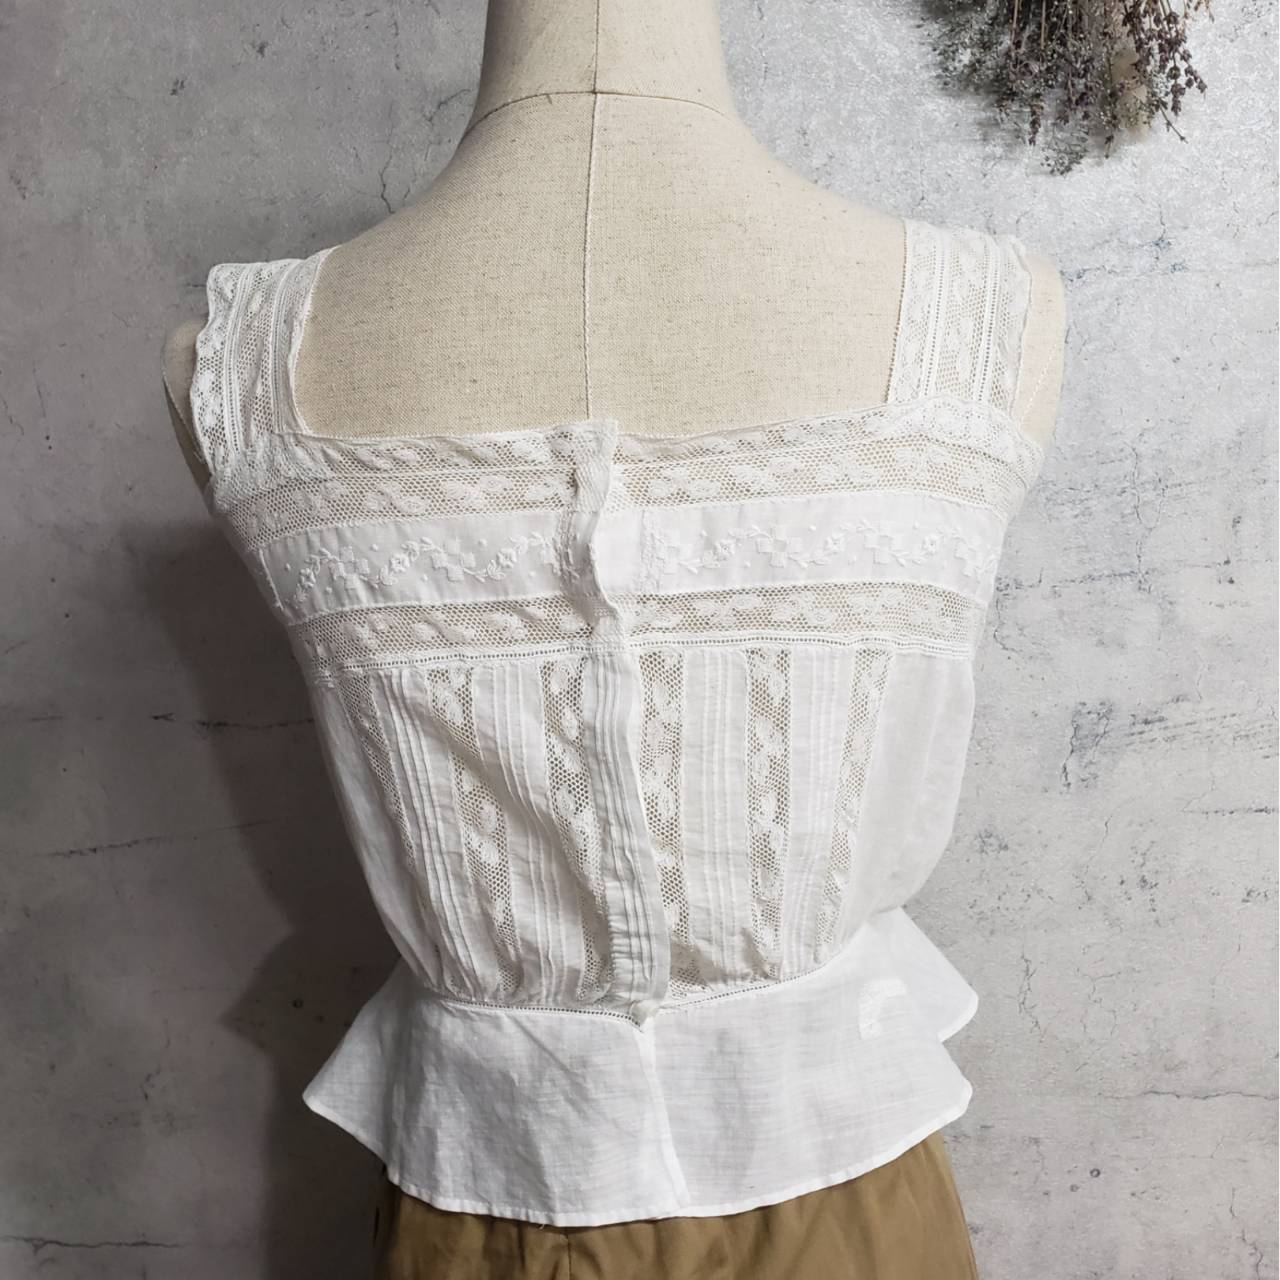 Euro Vintage(ヨーロッパヴィンテージ) Kasane_フレンチレースと刺繍を纏うキャミソール 表記なし(Mサイズ程度) ホワイト